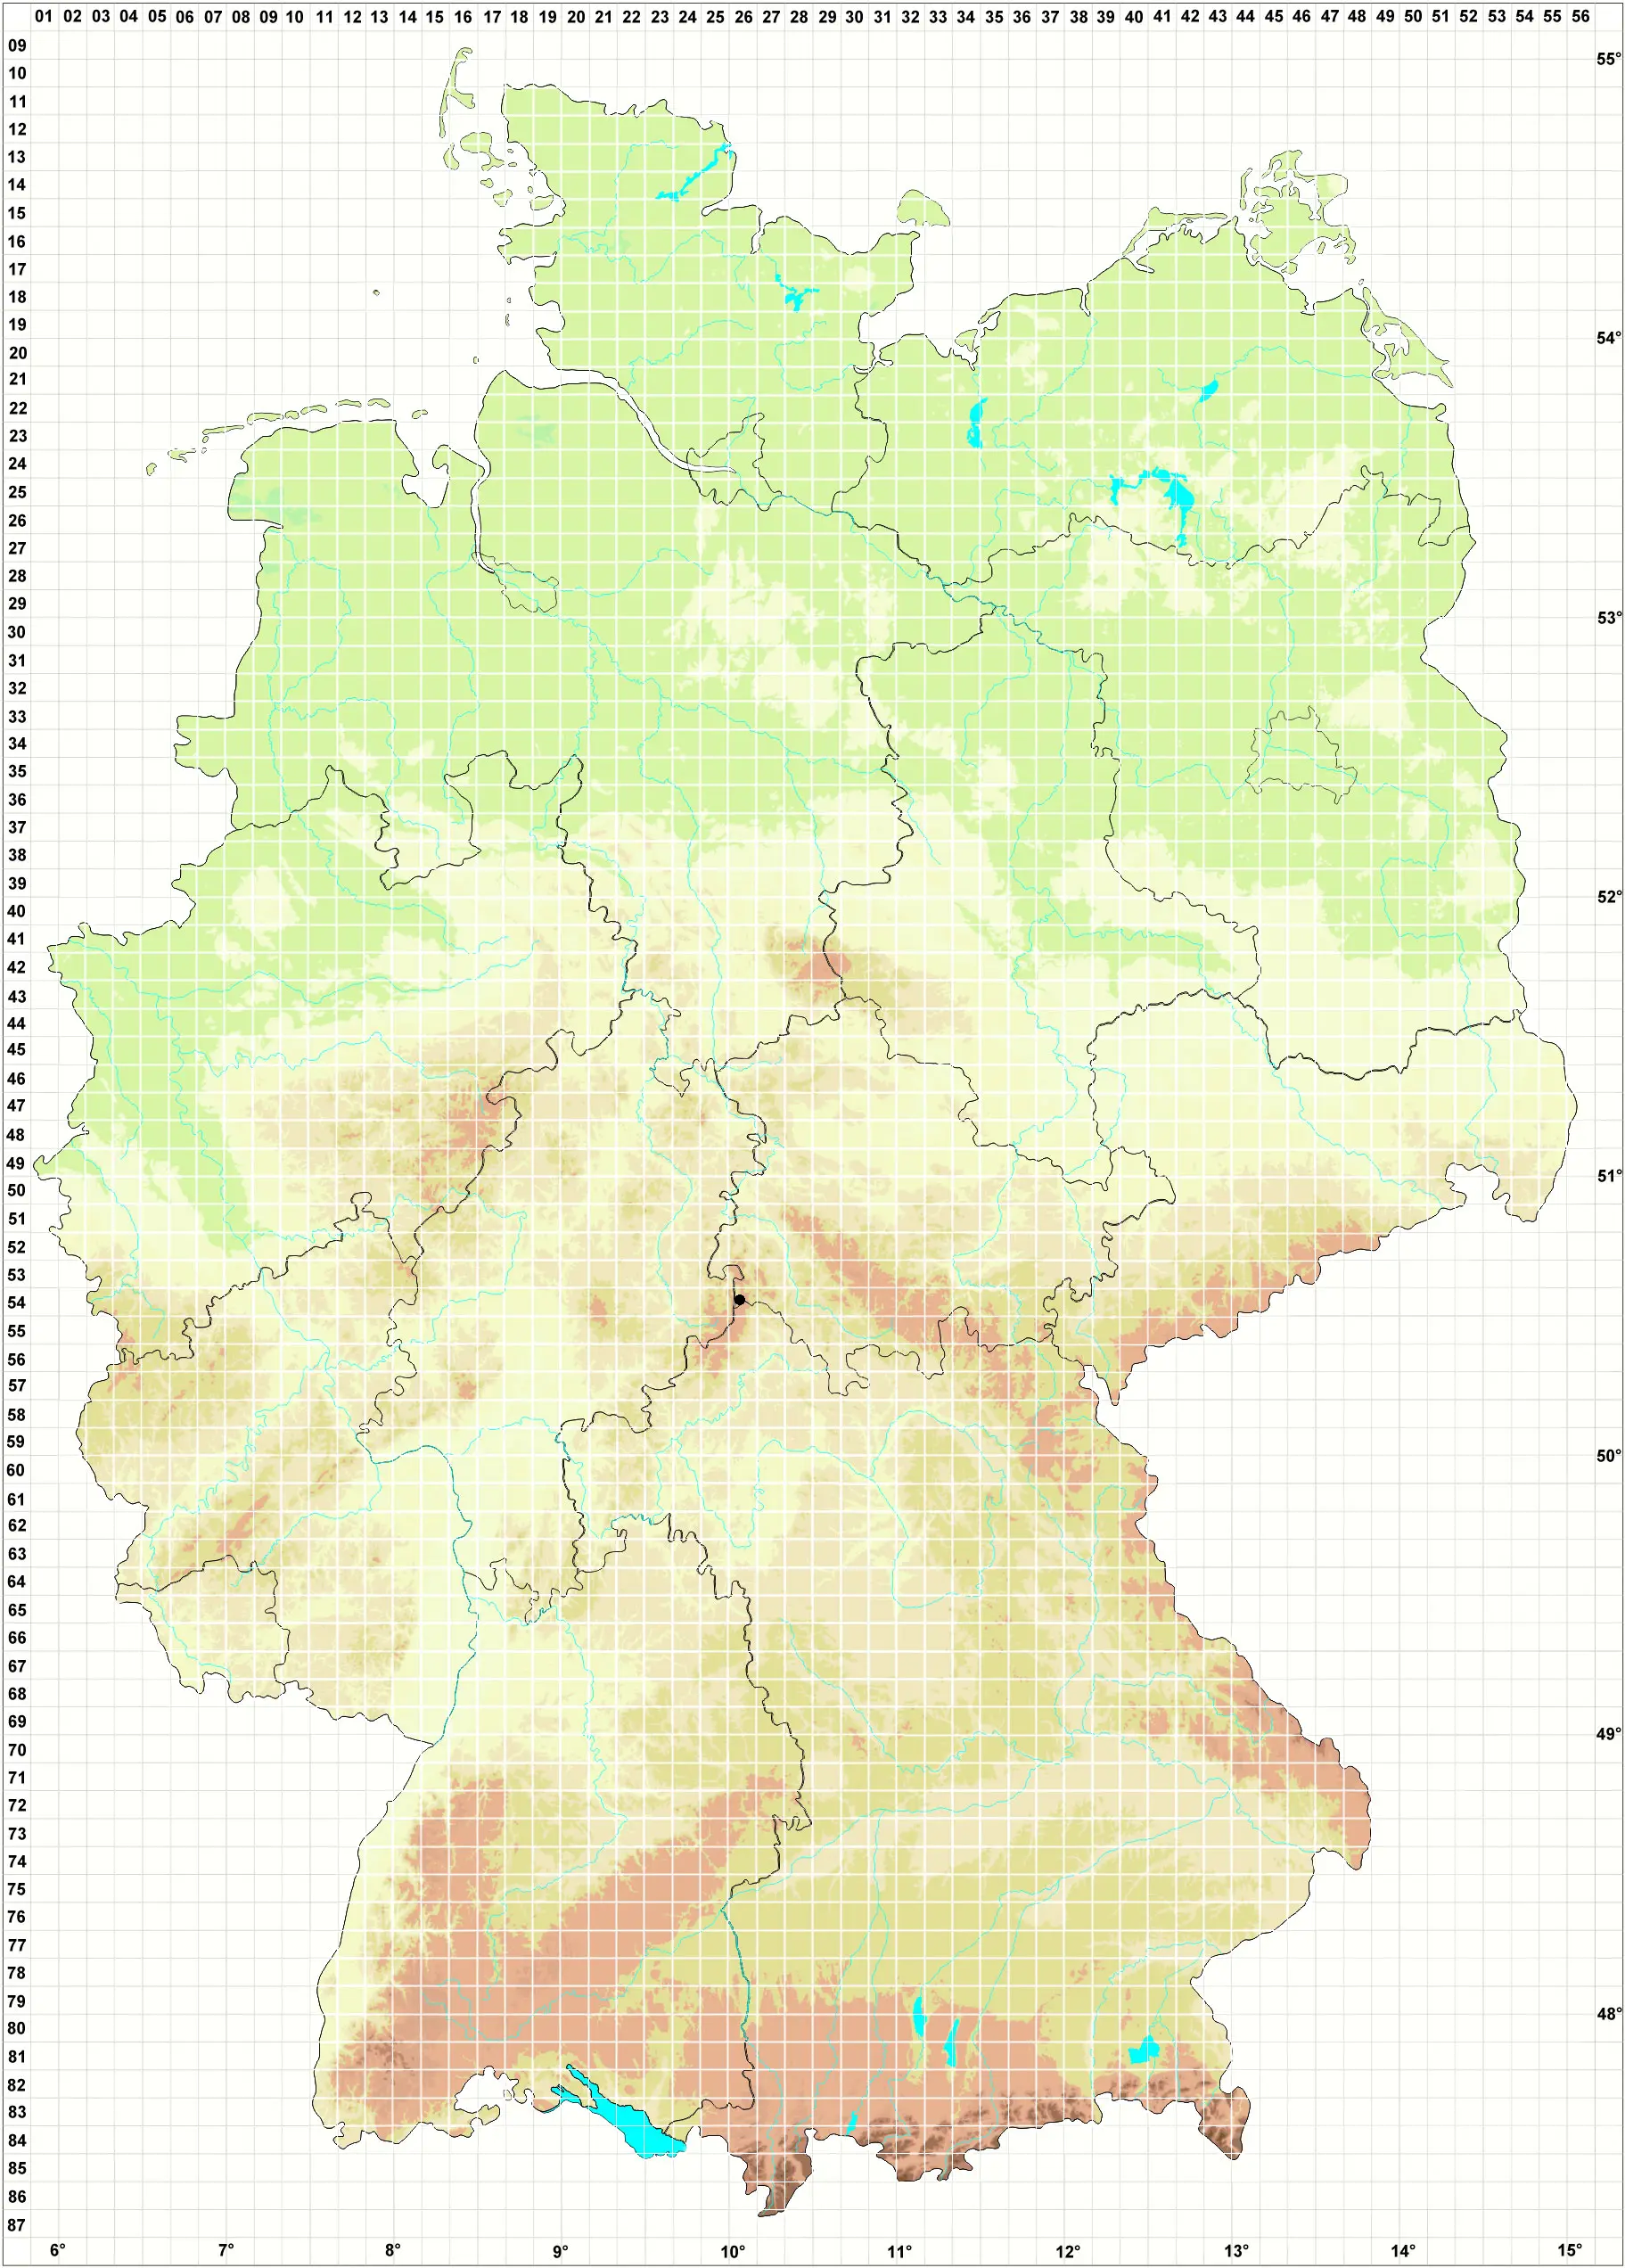 Karte H. Grünberg, M. Preußing 26.03.2012